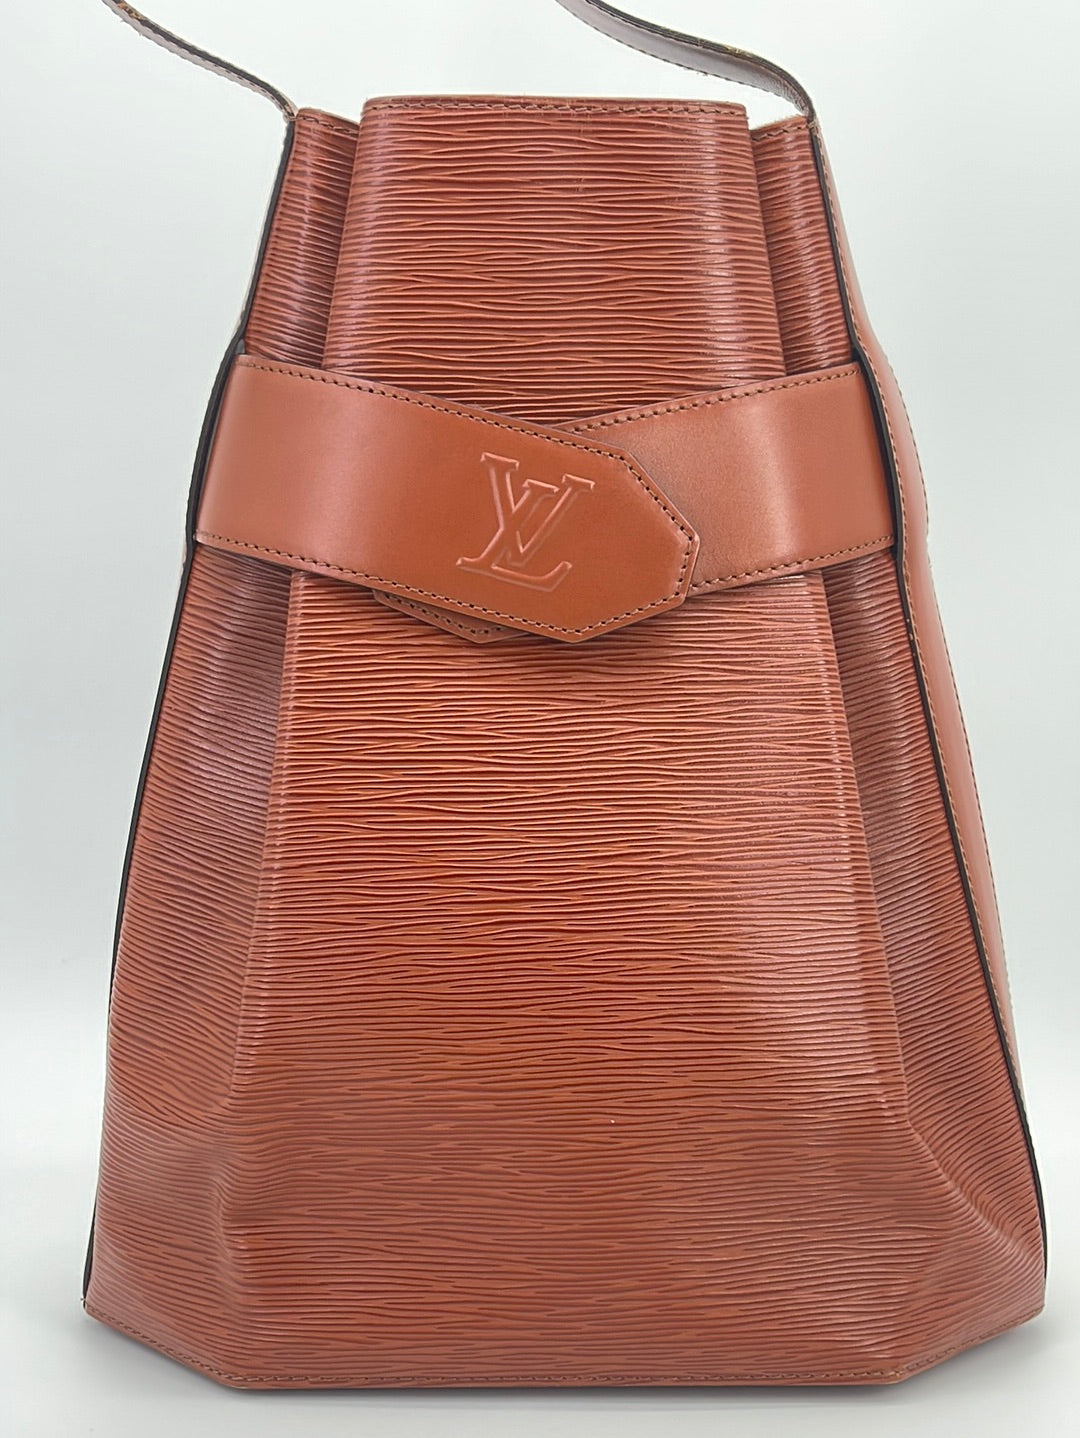 Vintage Louis Vuitton Epi Sac d' Epaule GM Brown Epi Leather Shoulder Bag HXJJYMD 051223